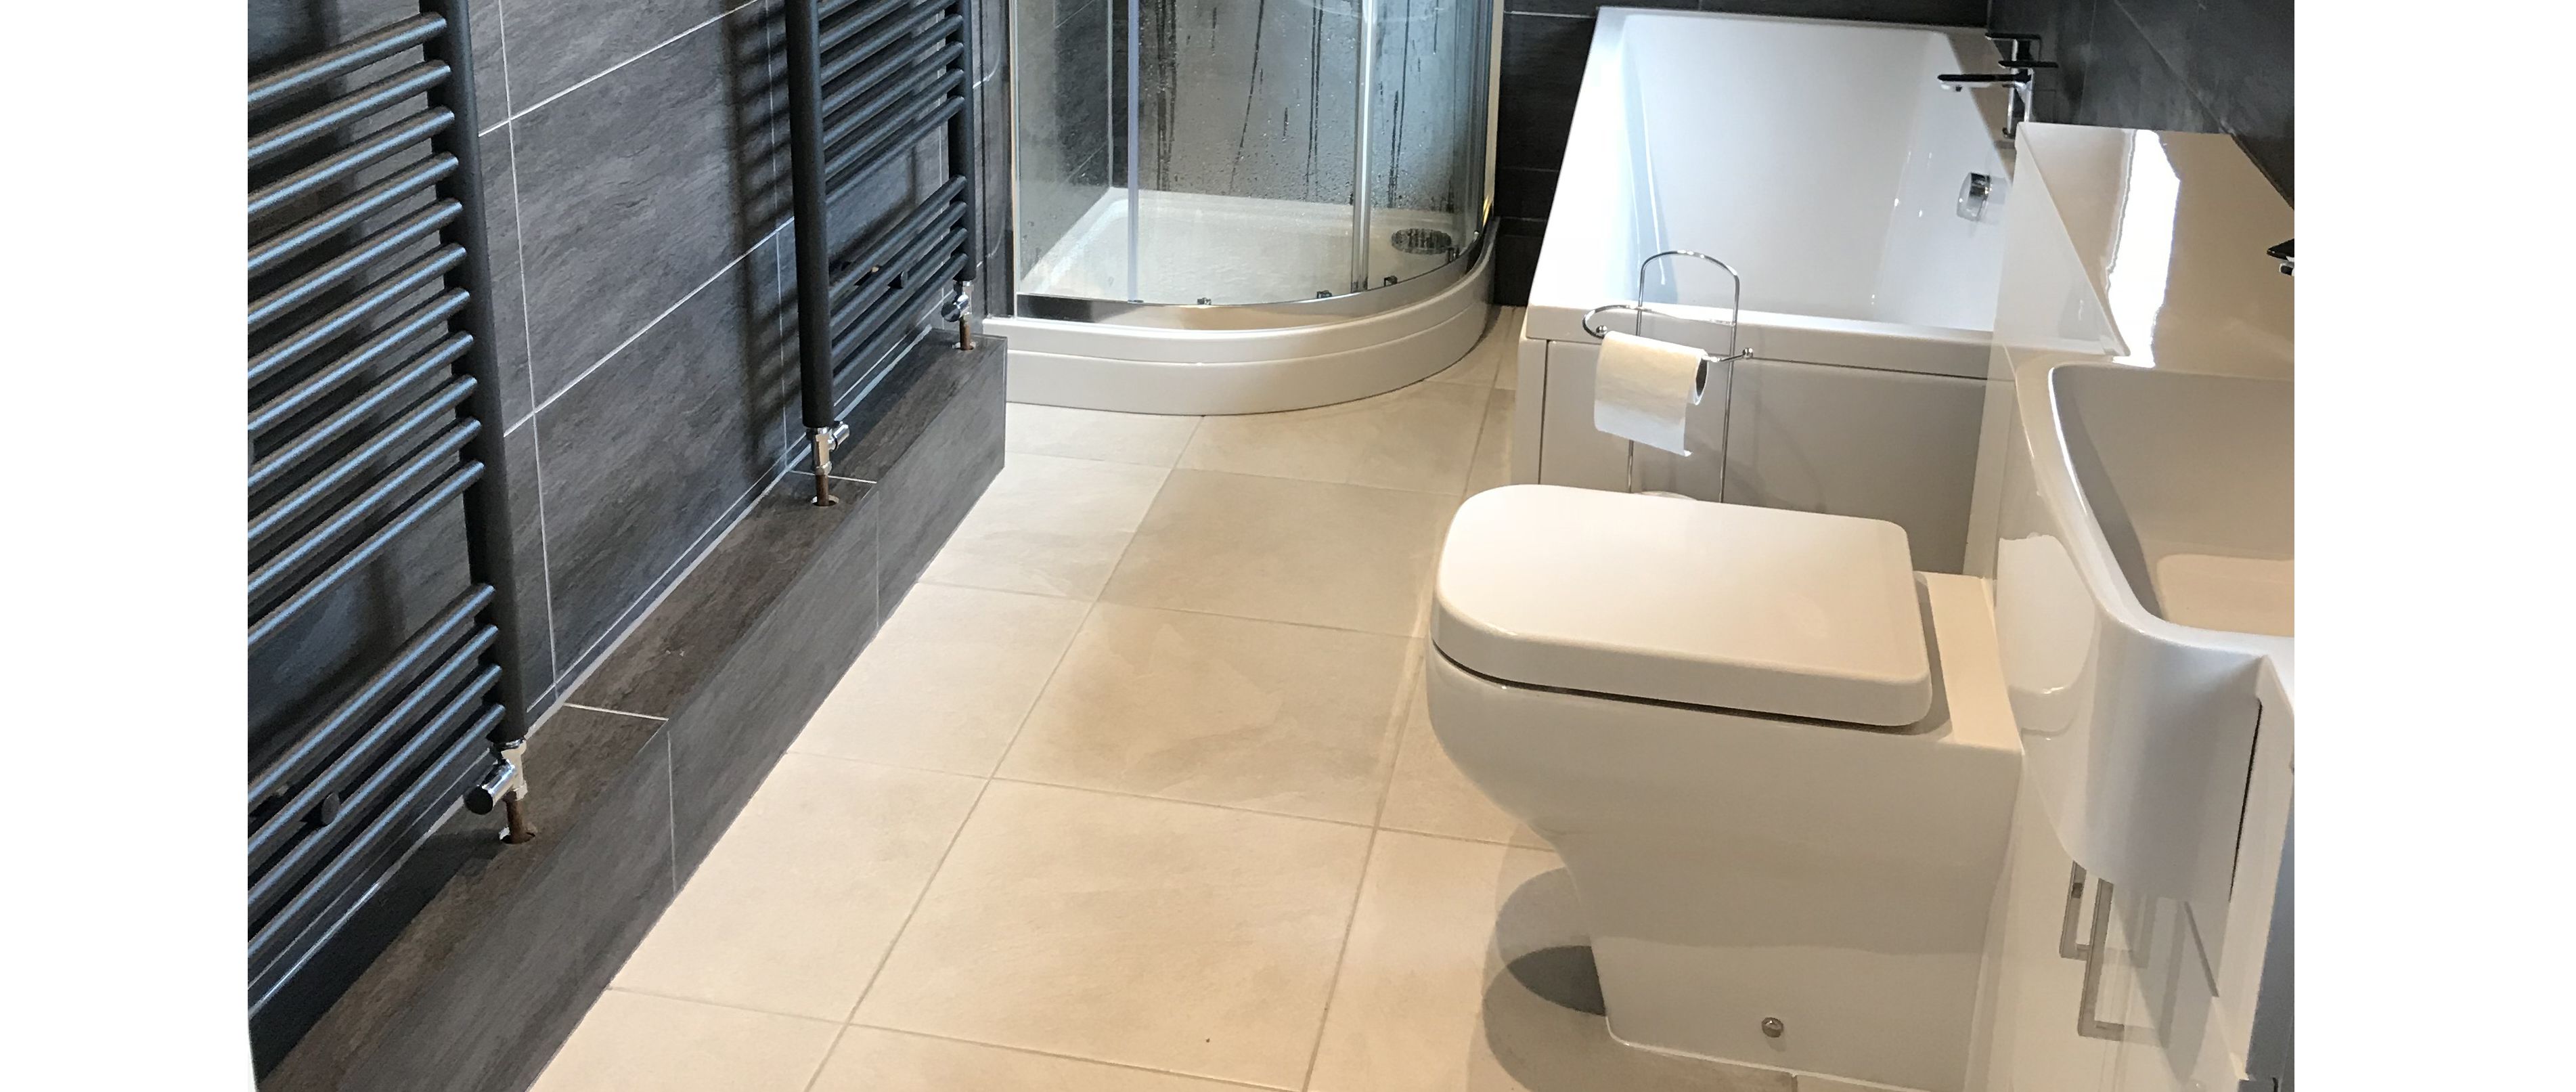 angular bathtub and toilet in this modern bathroom